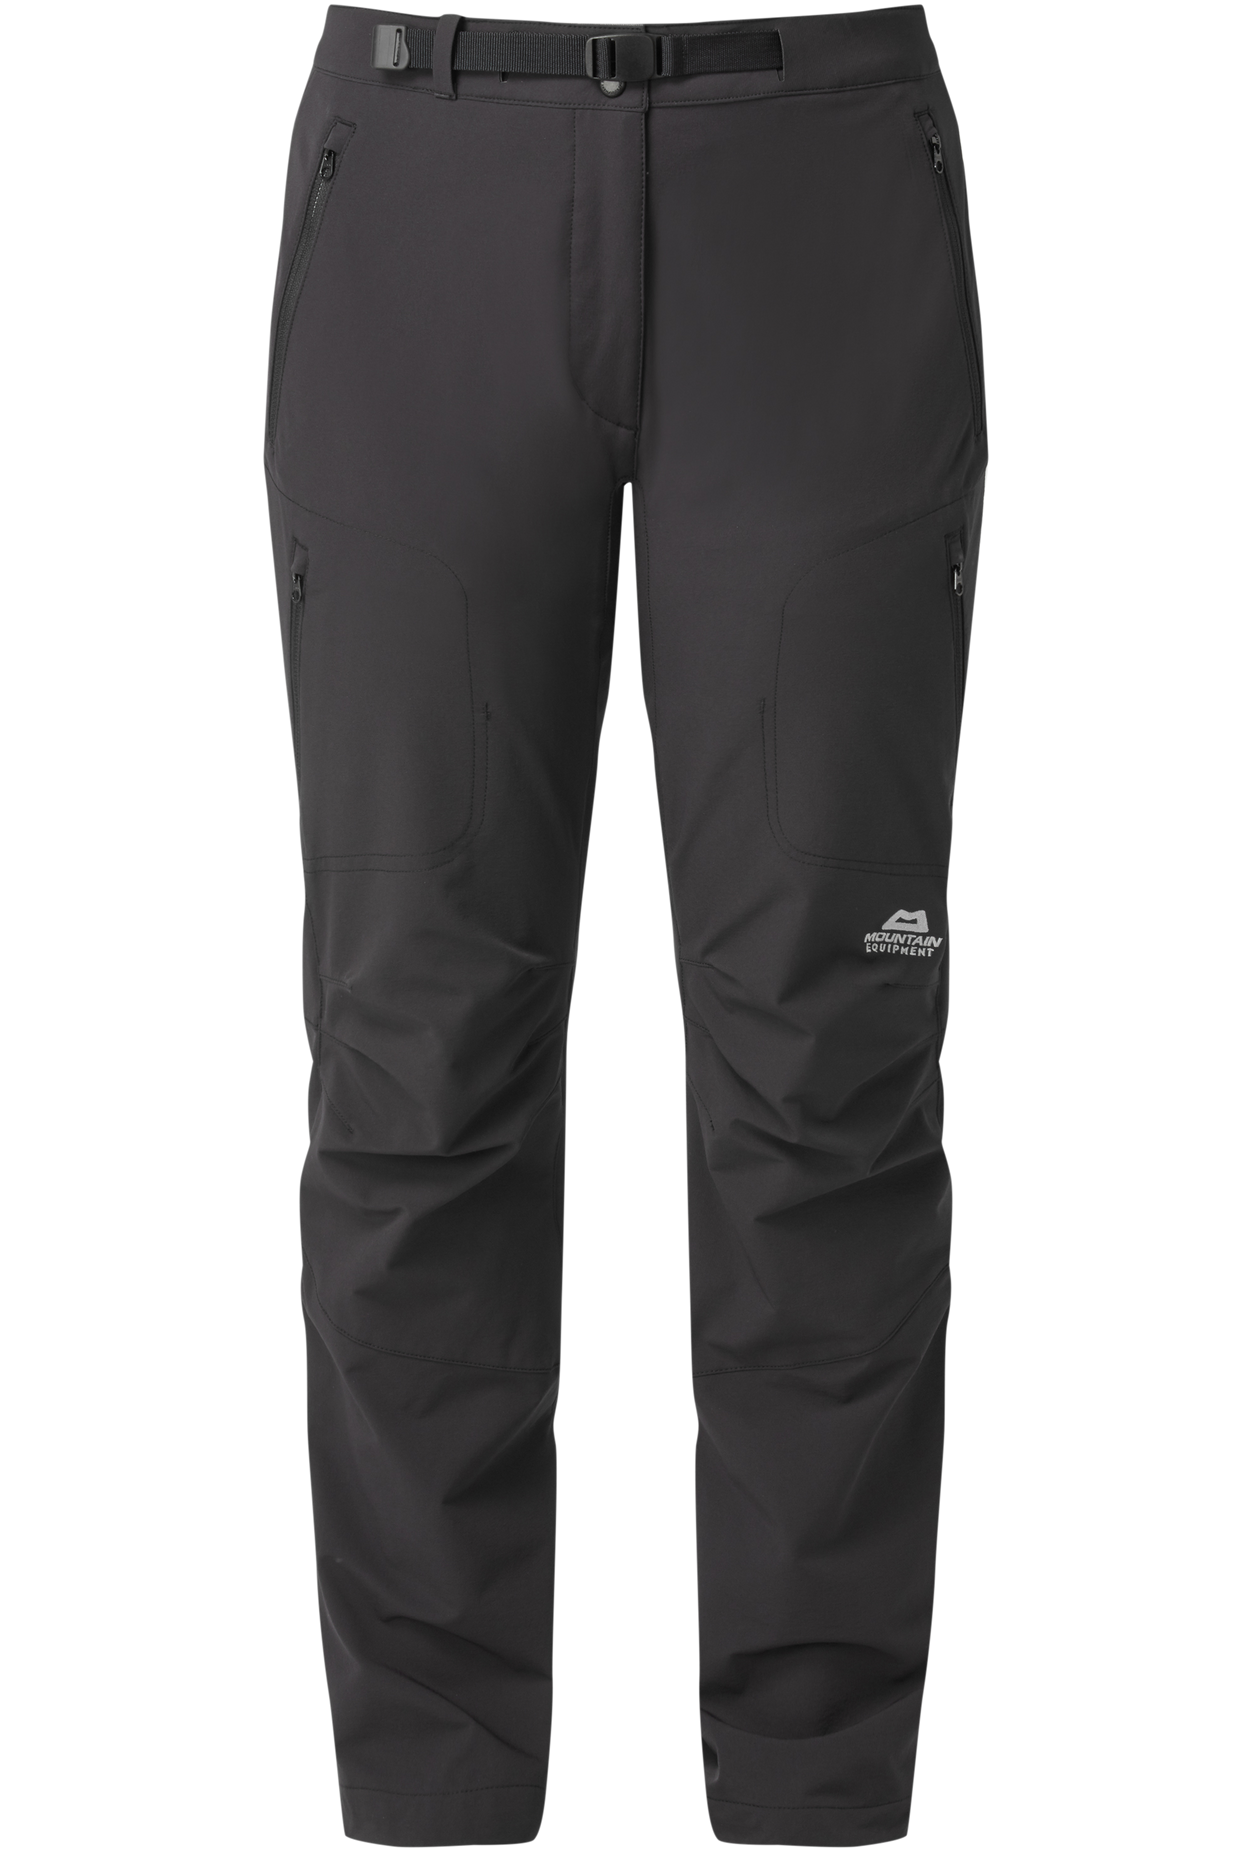 Mountain Equipment dámské softshellové kalhoty Chamois Wmns Pant Barva: black, Velikost: 14/L